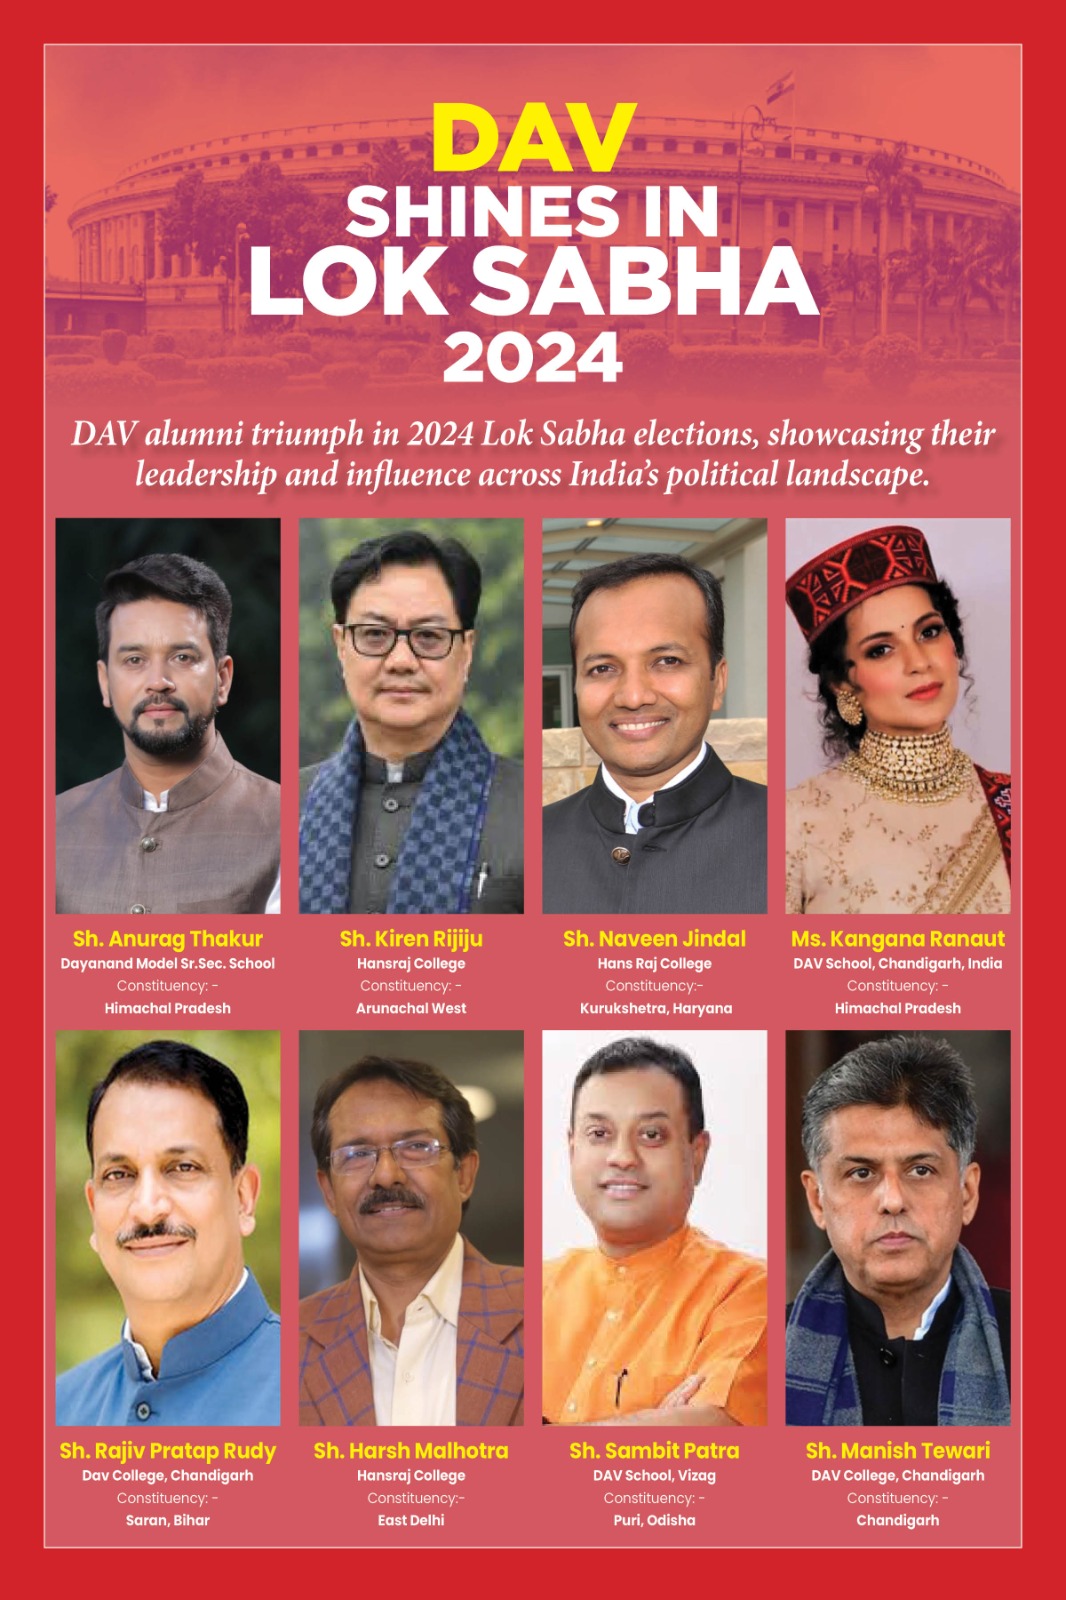 DAV Alumni in Lok Sabha 2024